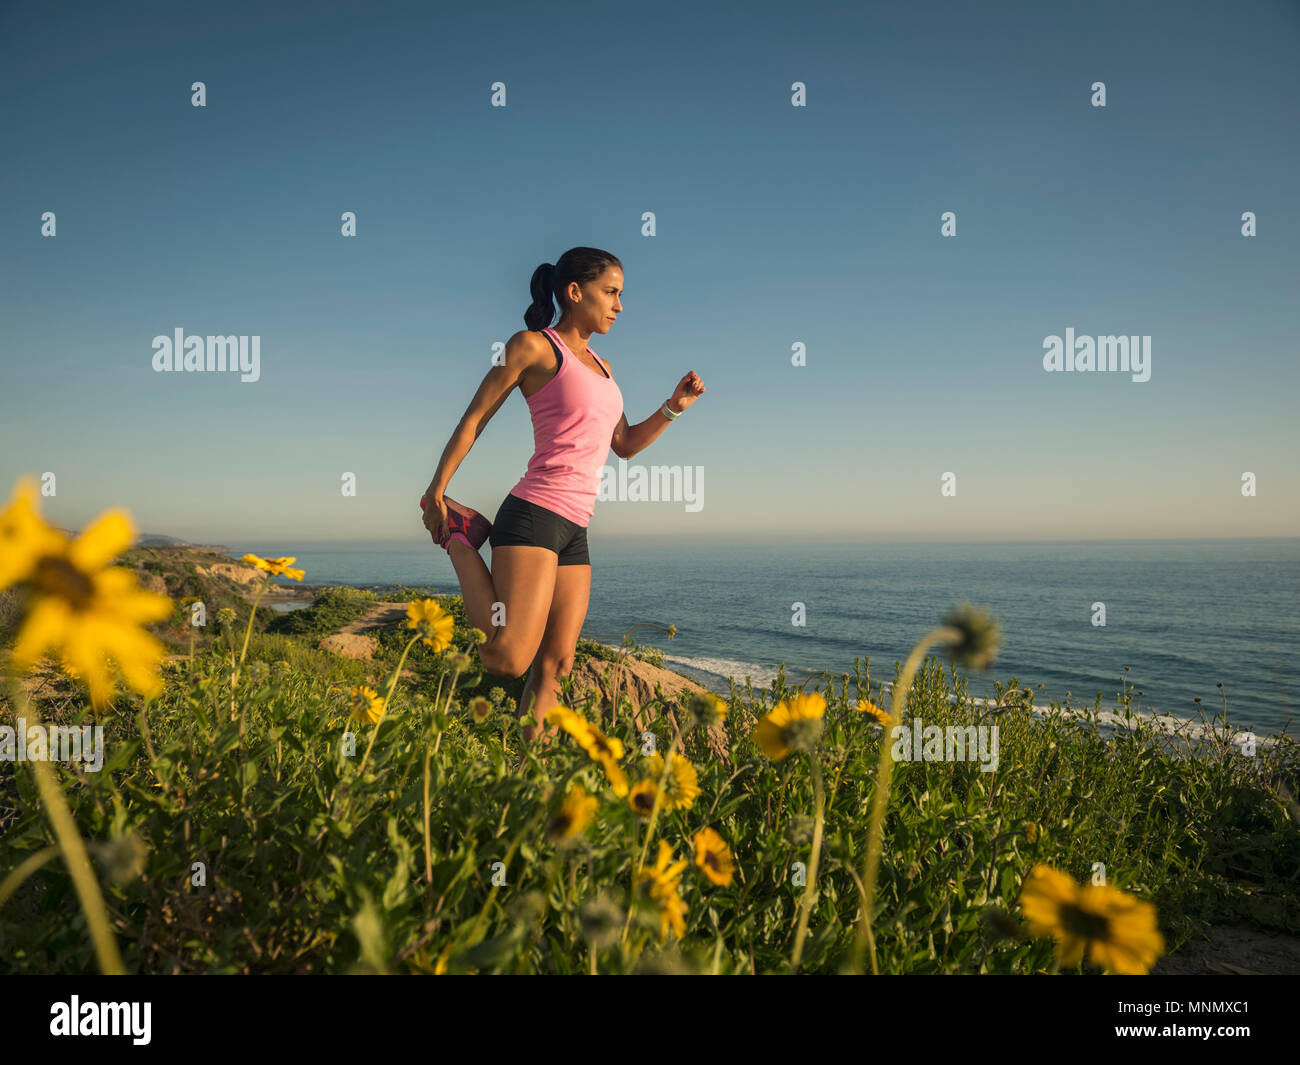 USA, California, Newport Beach, Woman stretching on cliff Stock Photo